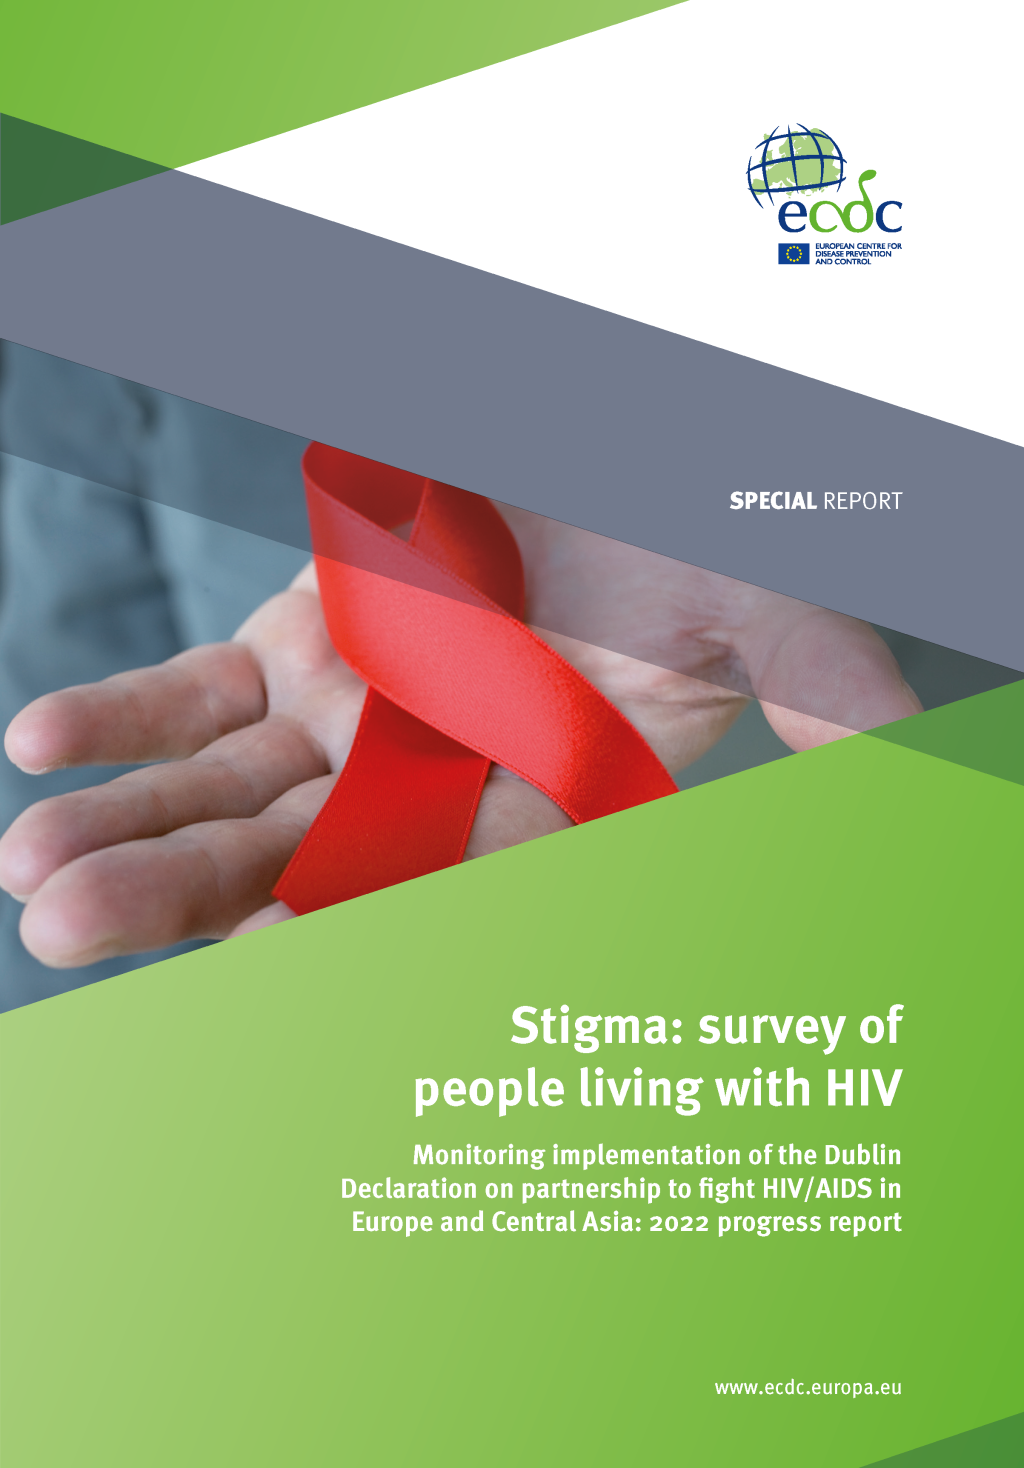 hiv-stigma-survey-monitoring-dublin-declaration.png